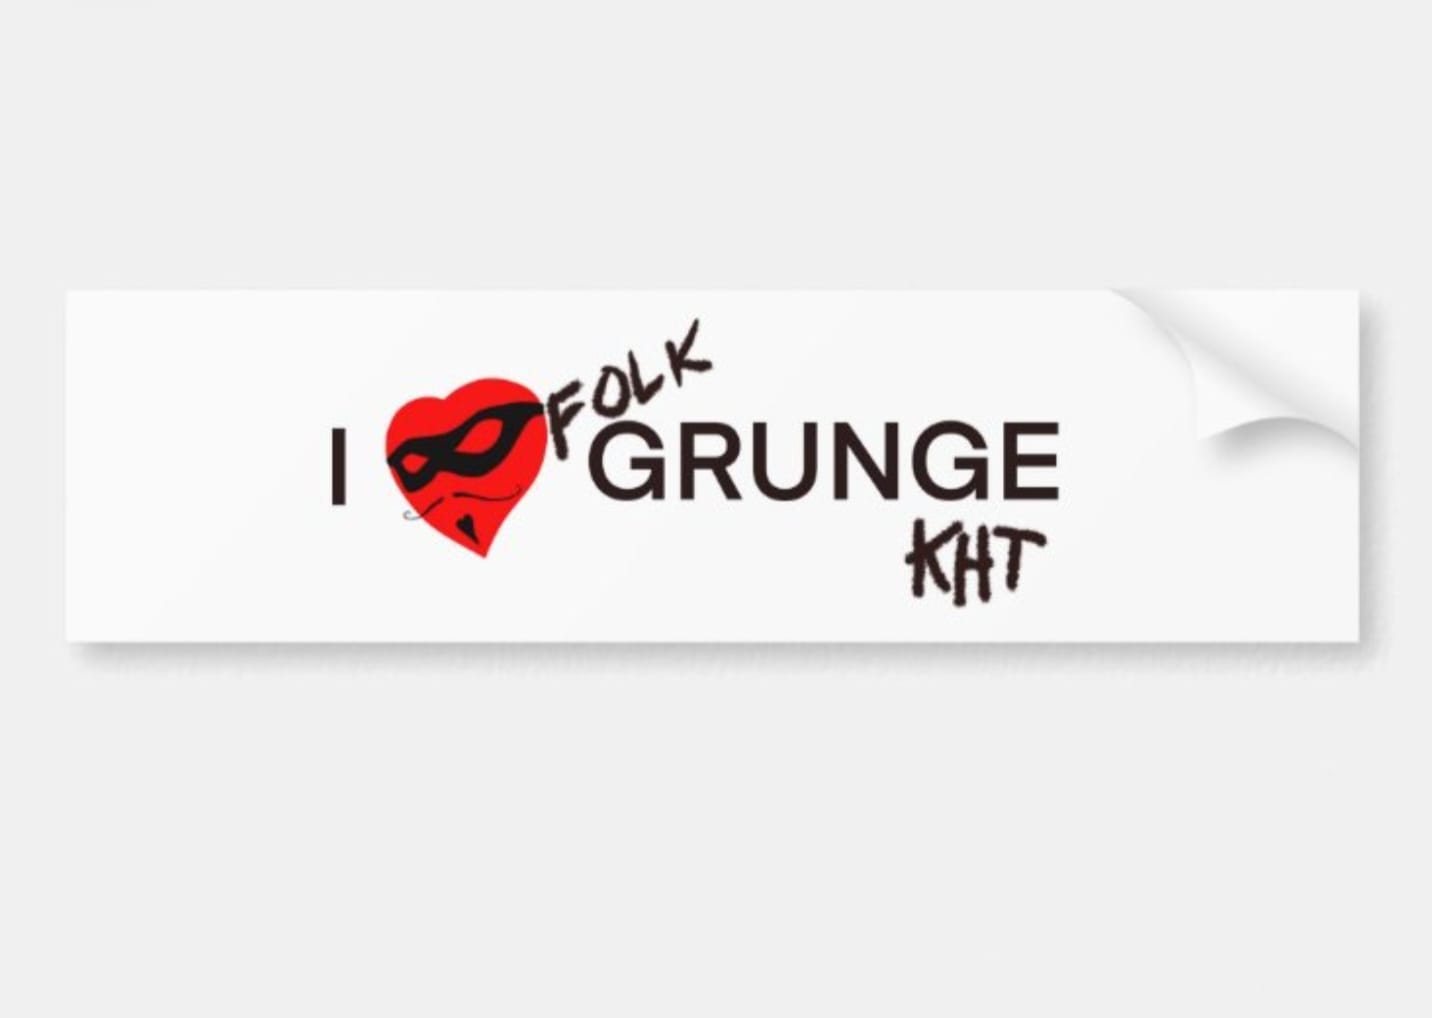 CAR BUMPER STICKER "I Love Folk Grunge KHT"